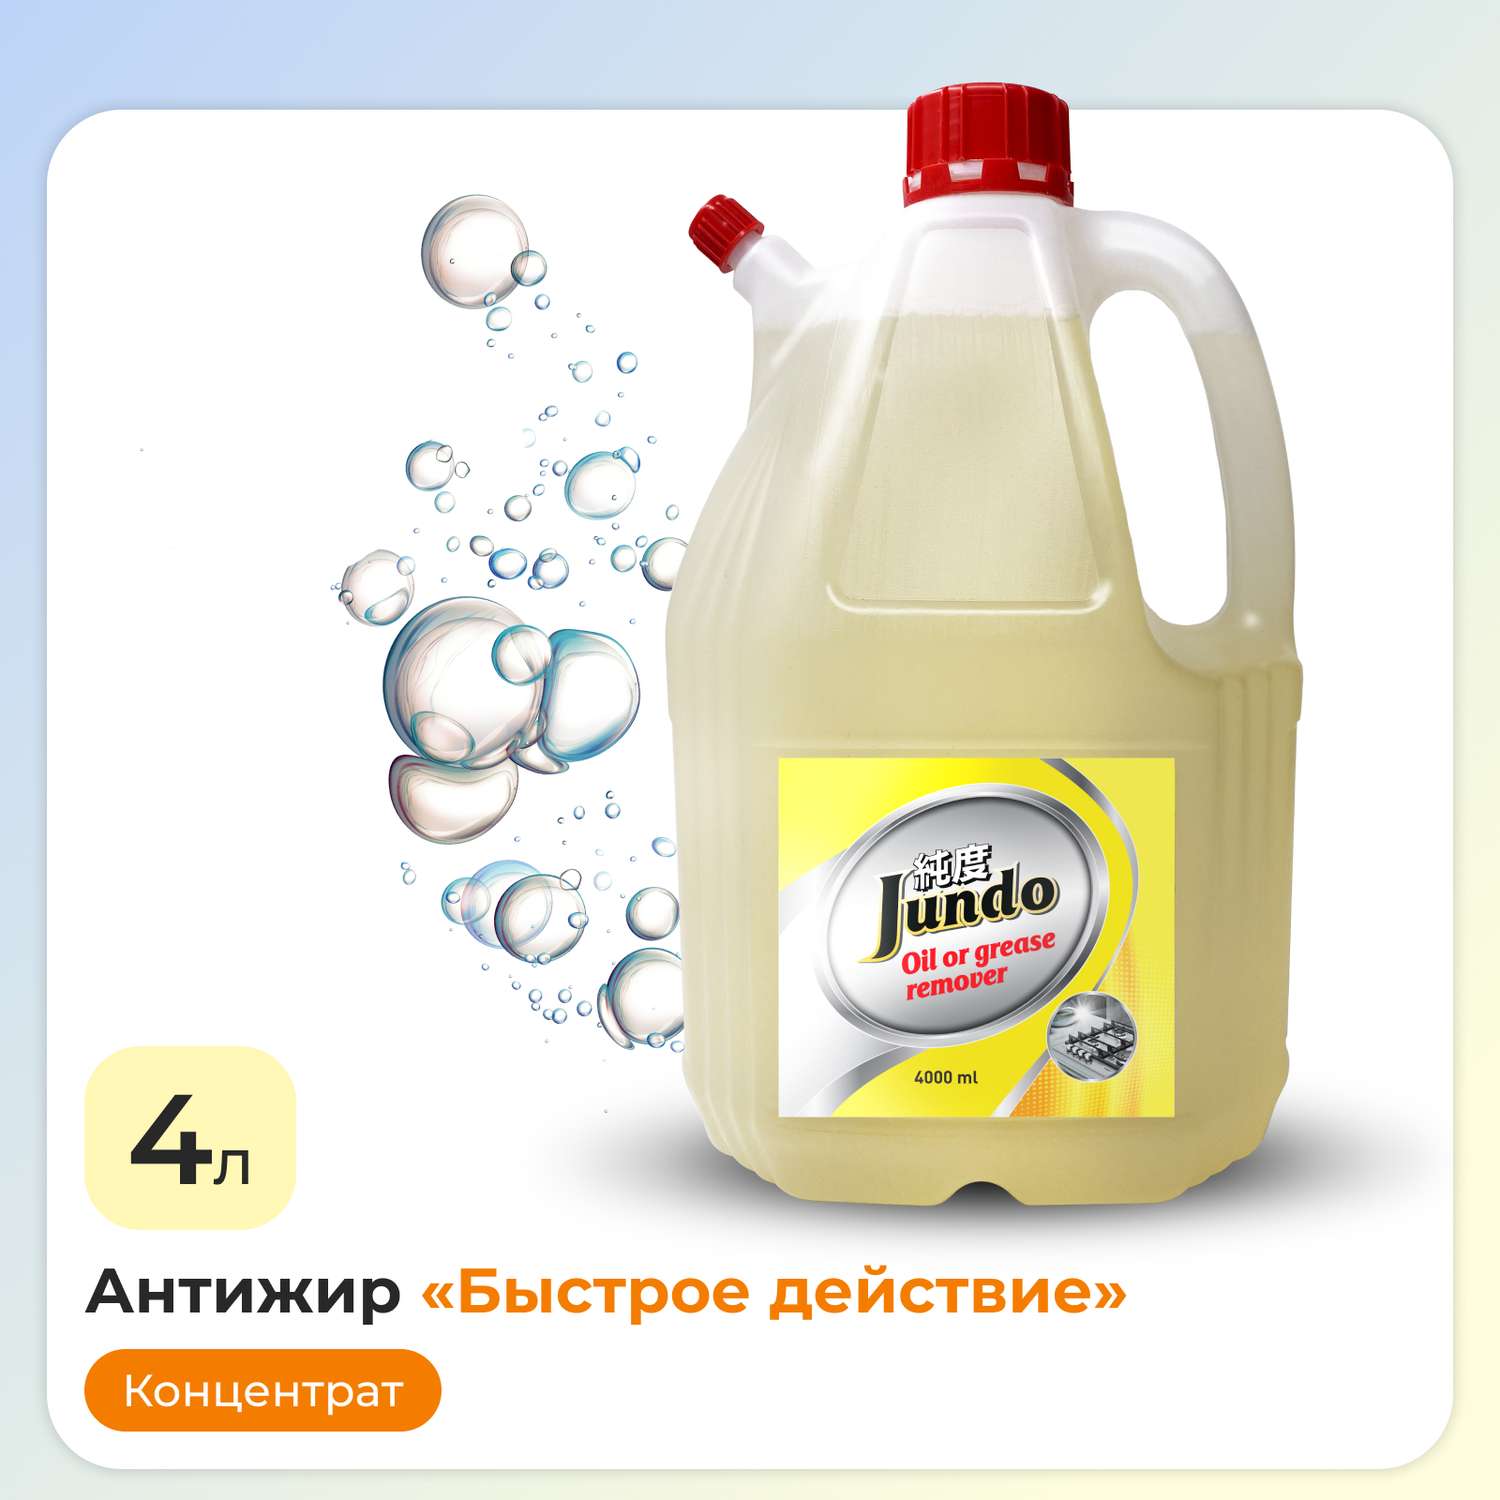 Чистящее средство для кухни Jundo Oil of grease remover 4 л антижир концентрат - фото 1